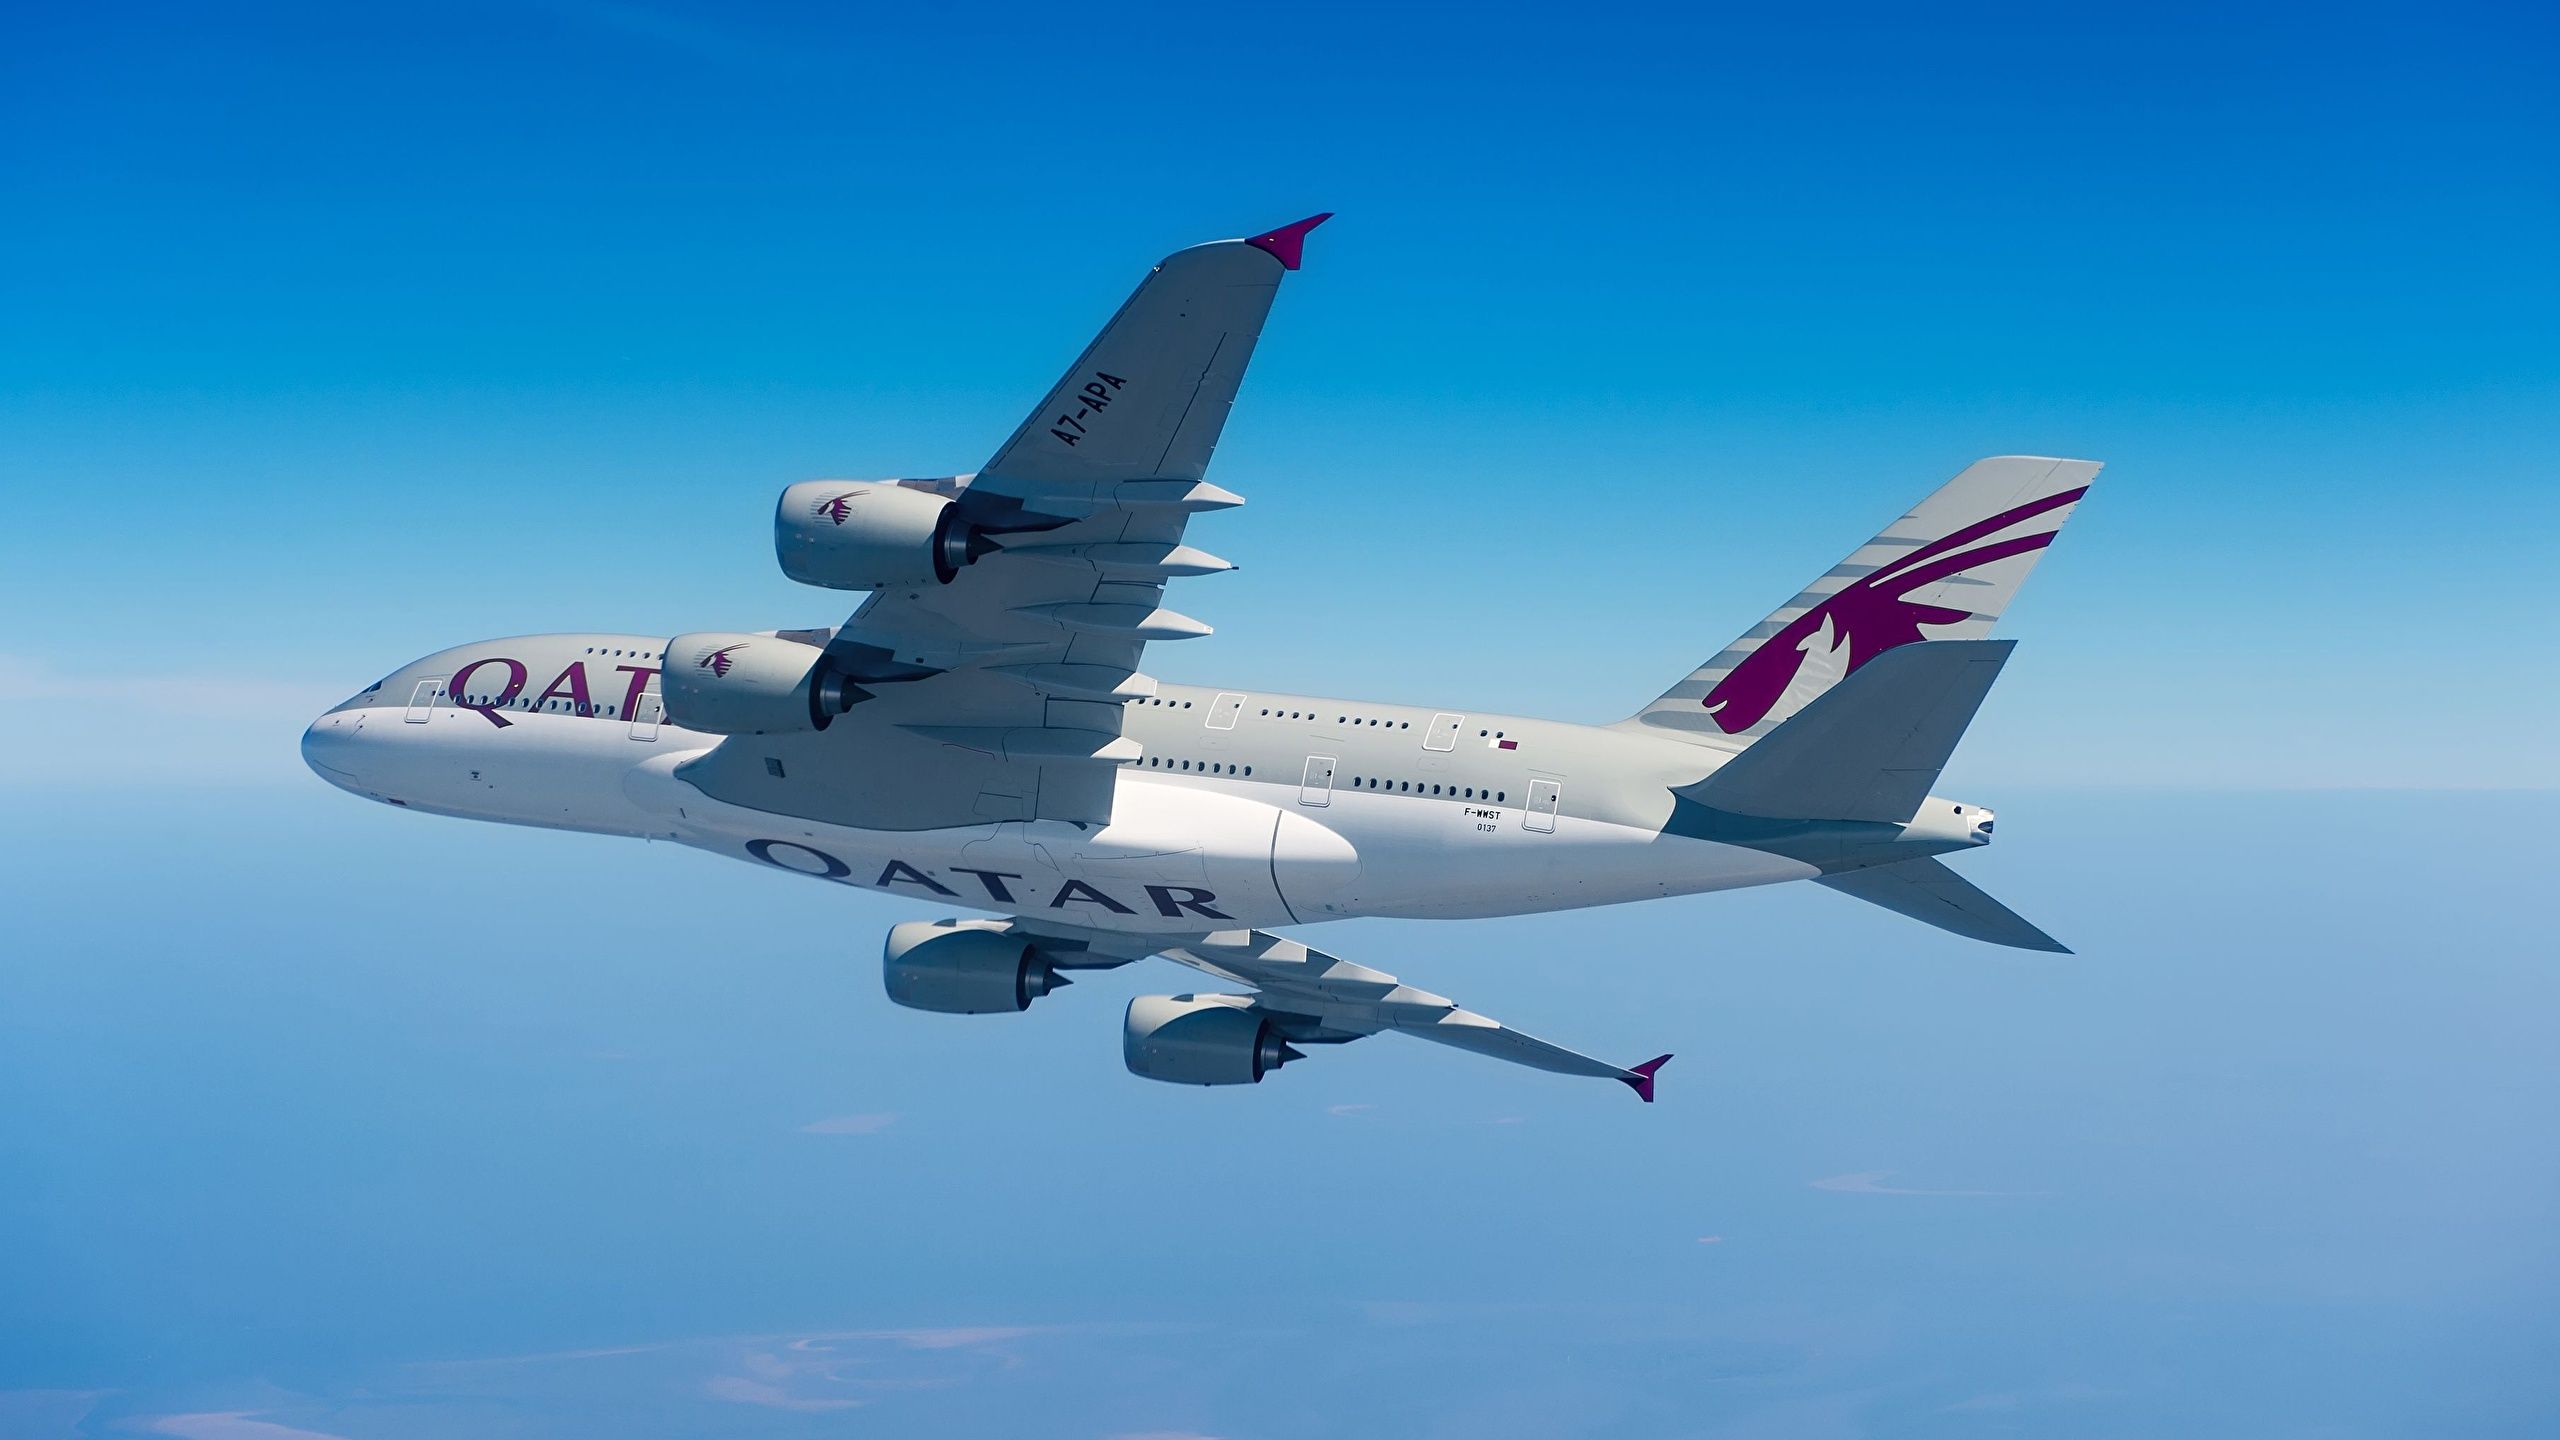 Wallpaper Airbus Passenger Airplanes Qatar Airways, 2560x1440